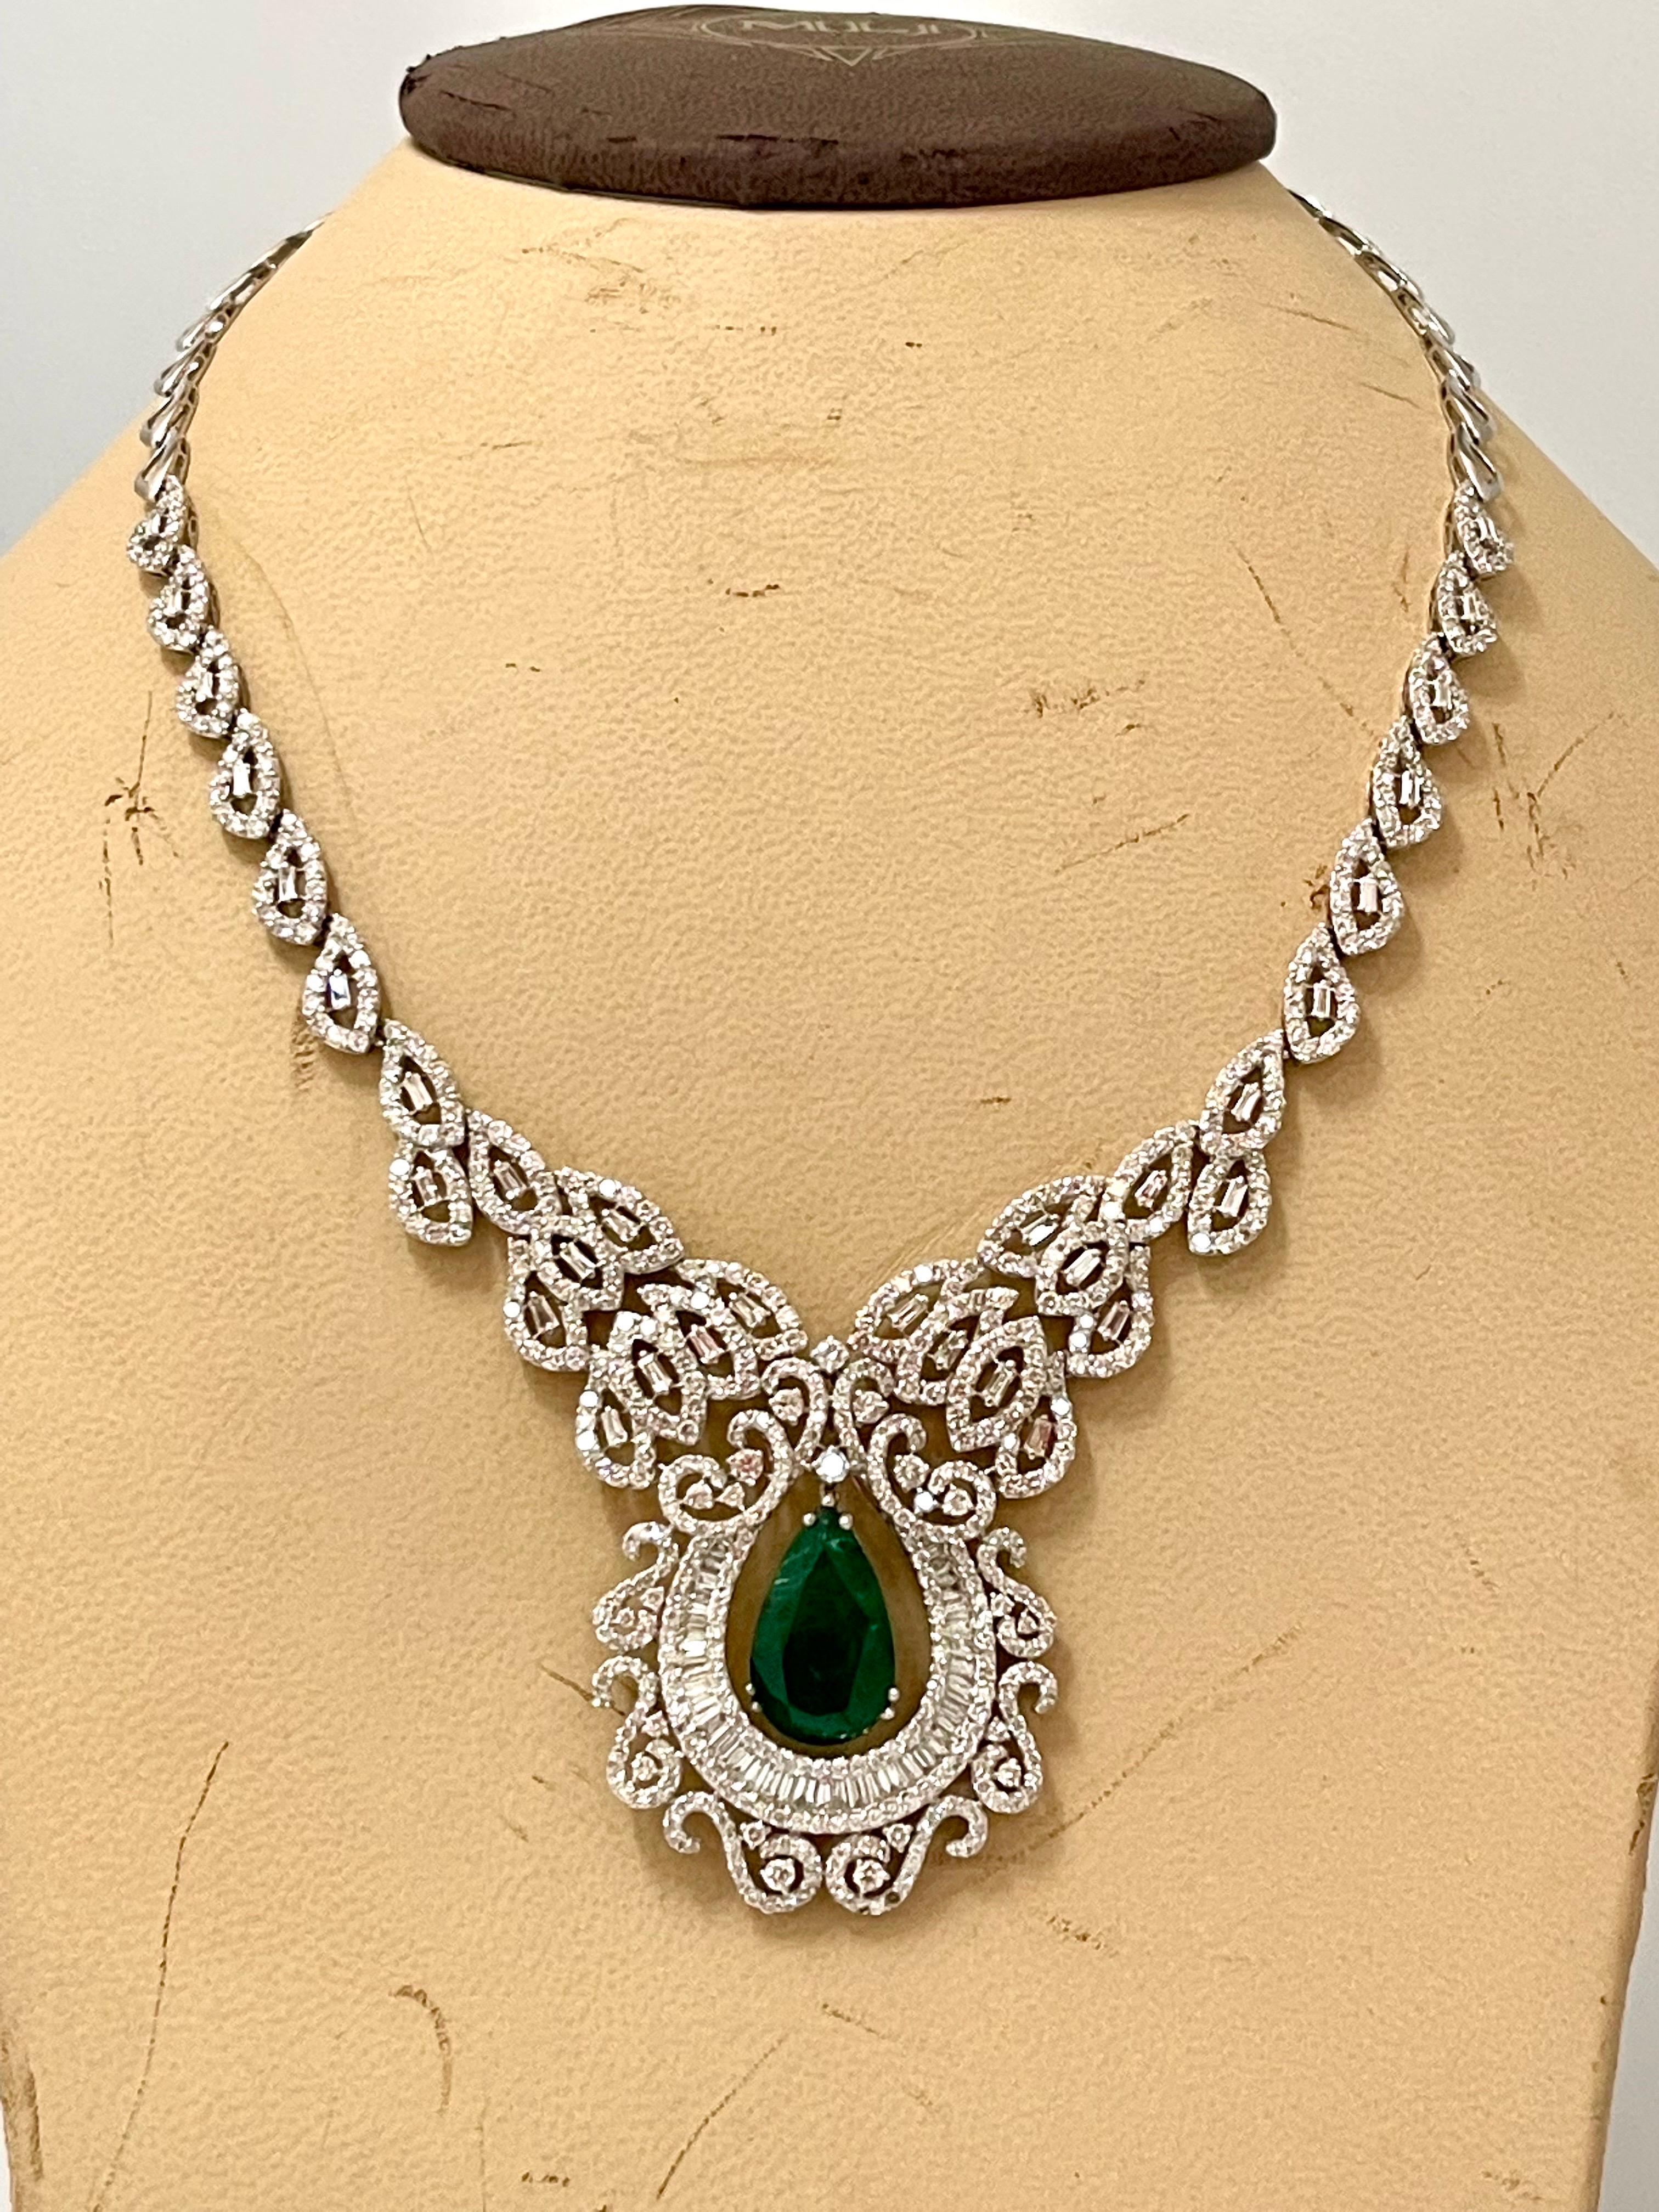 11 Ct Pear Shape Zambian Natural Emerald & 17 Ct Diamond Necklace 18 Karat Gold For Sale 5